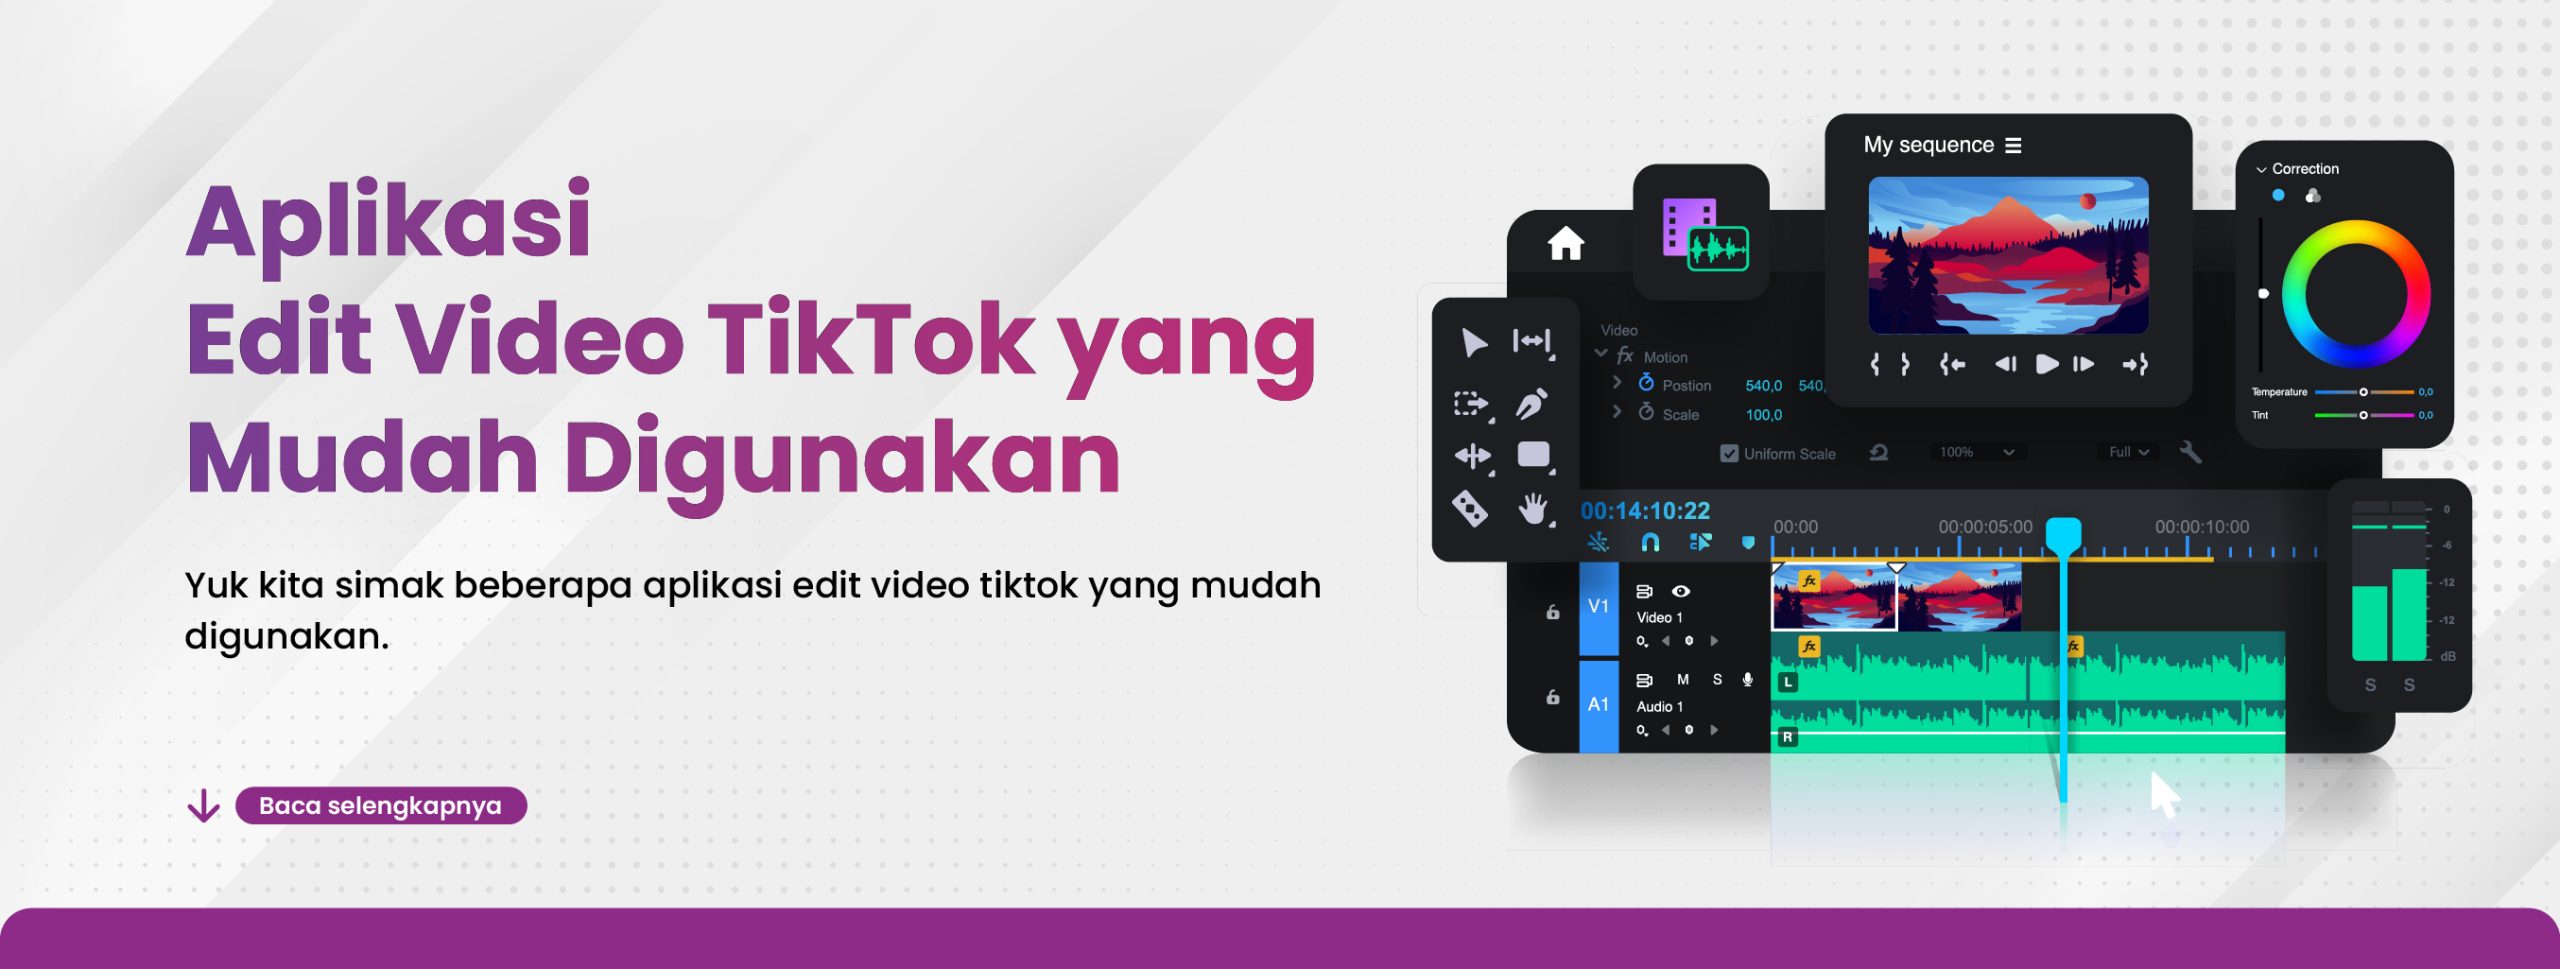 Aplikasi Edit Video TikTok yang Mudah Digunakan